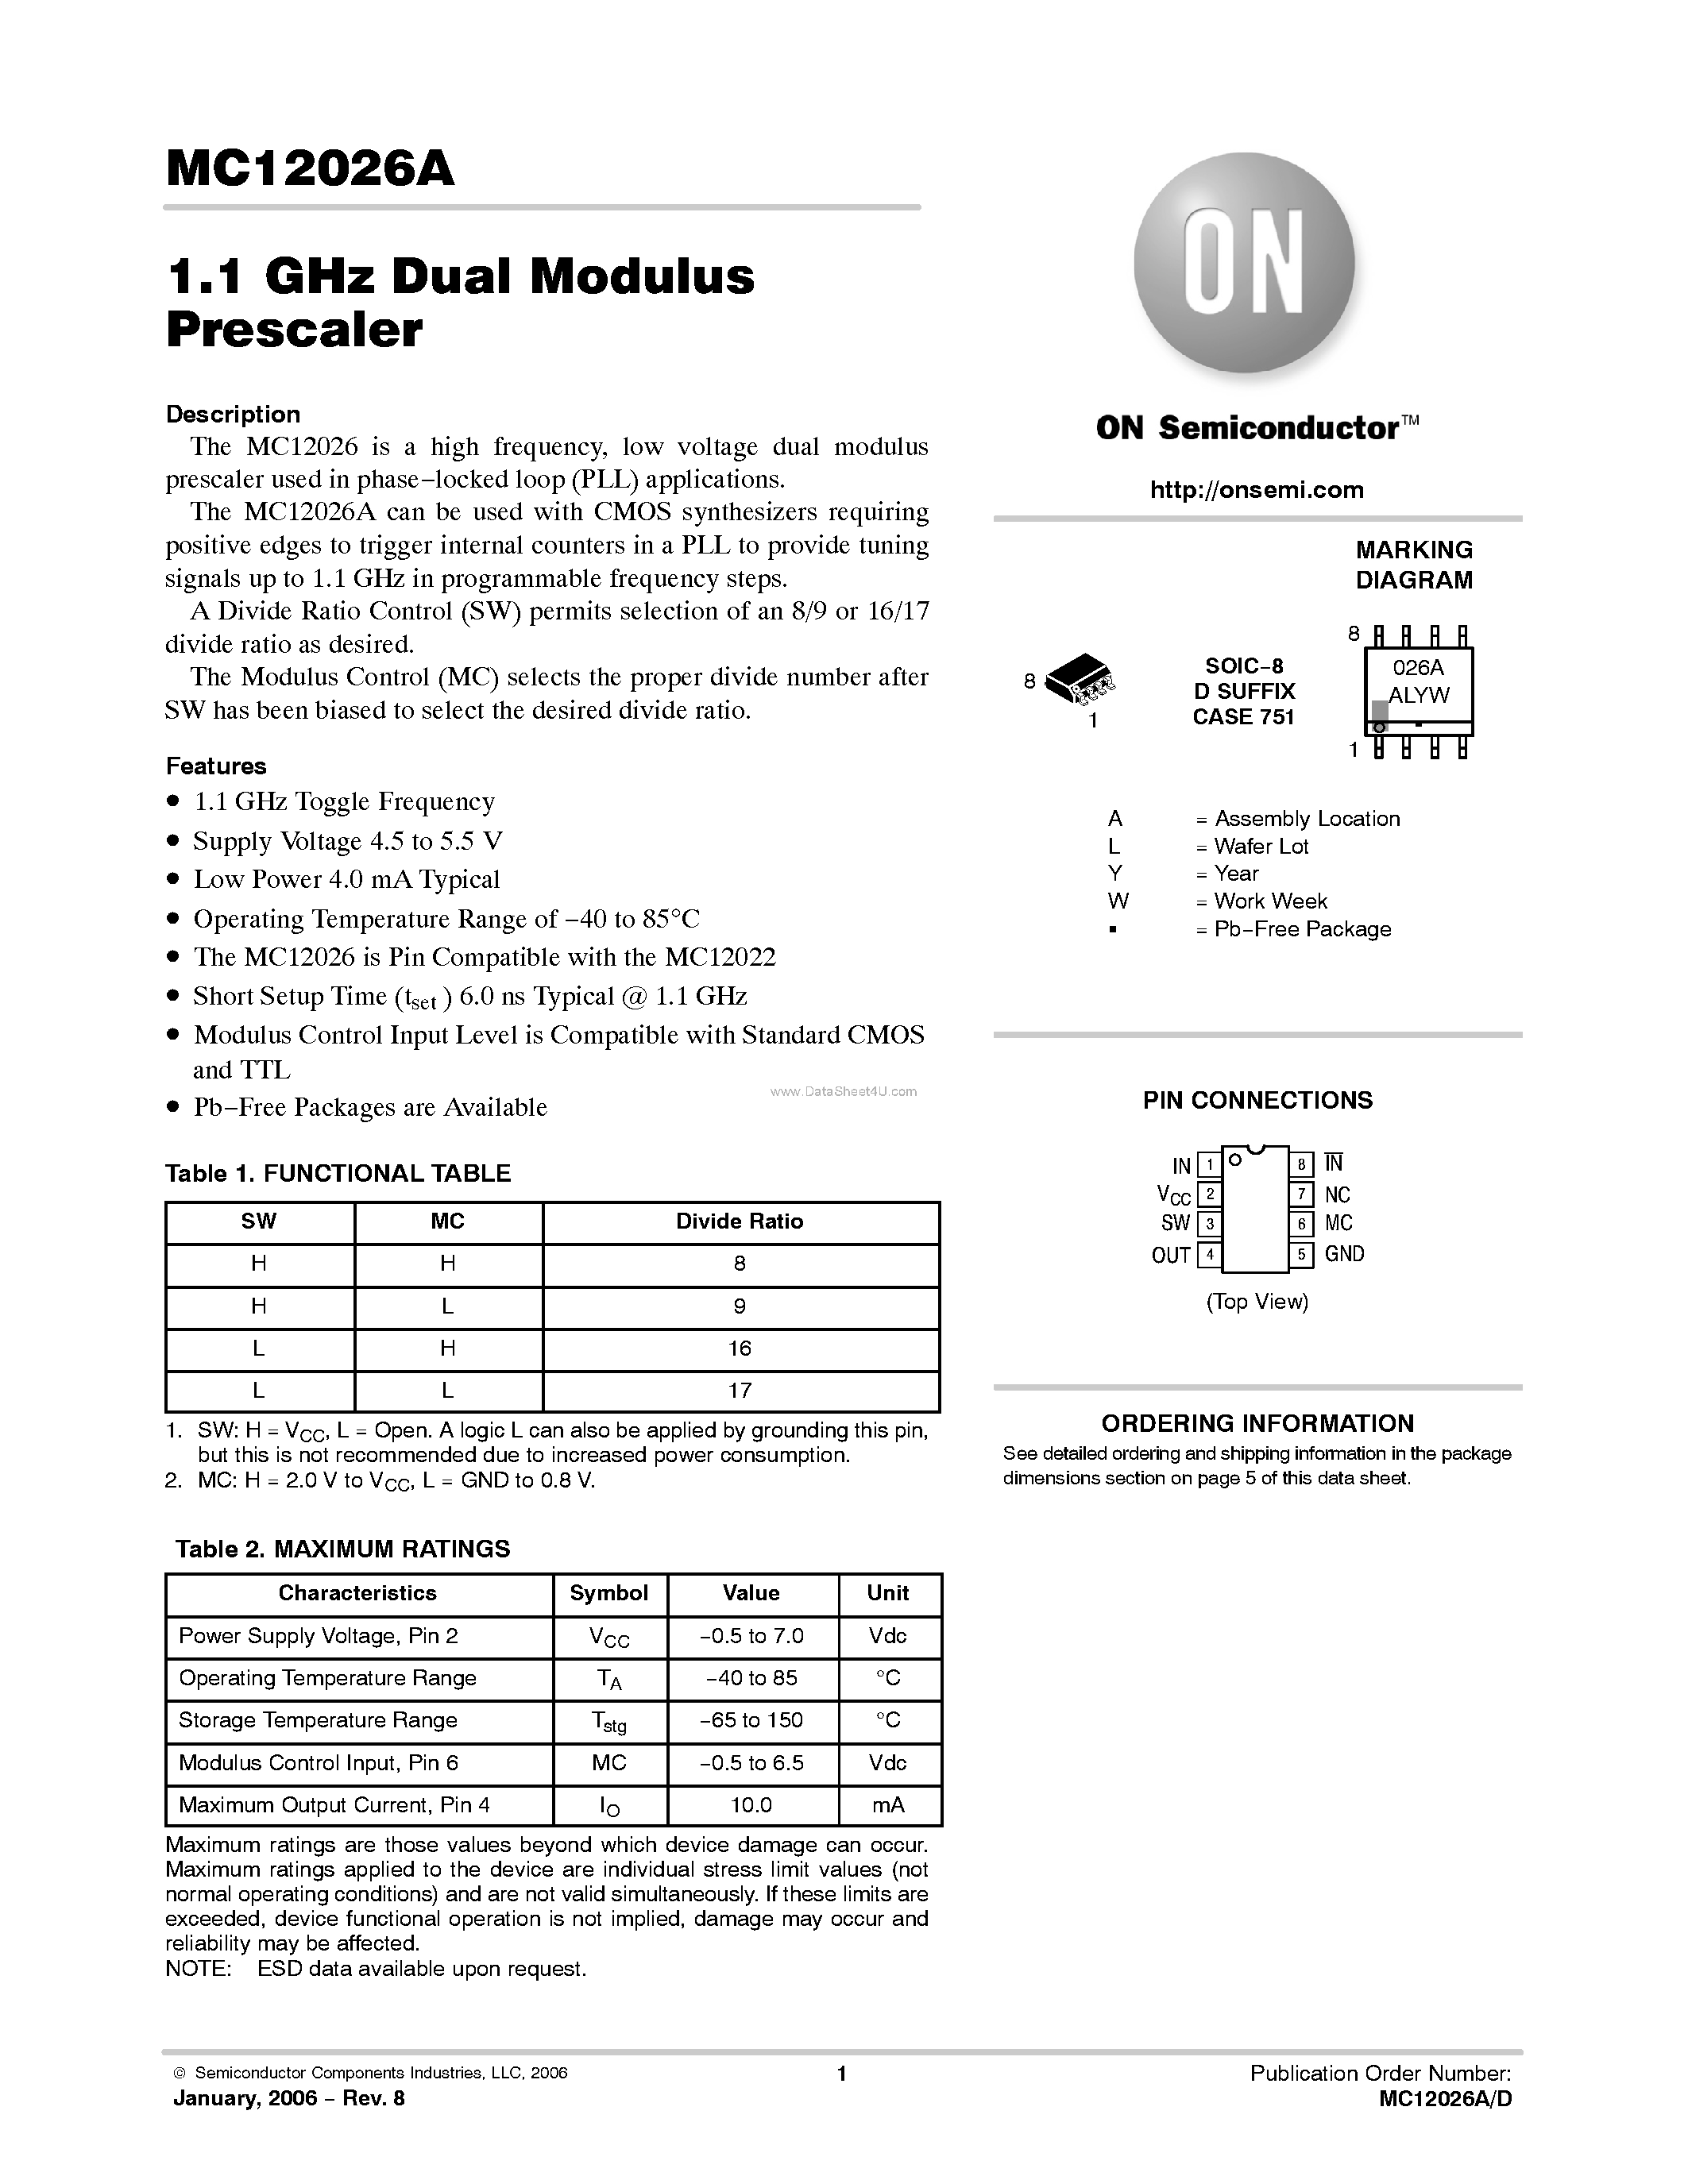 Datasheet MC12026A - 1.1 GHz Dual Modulus Prescaler page 1